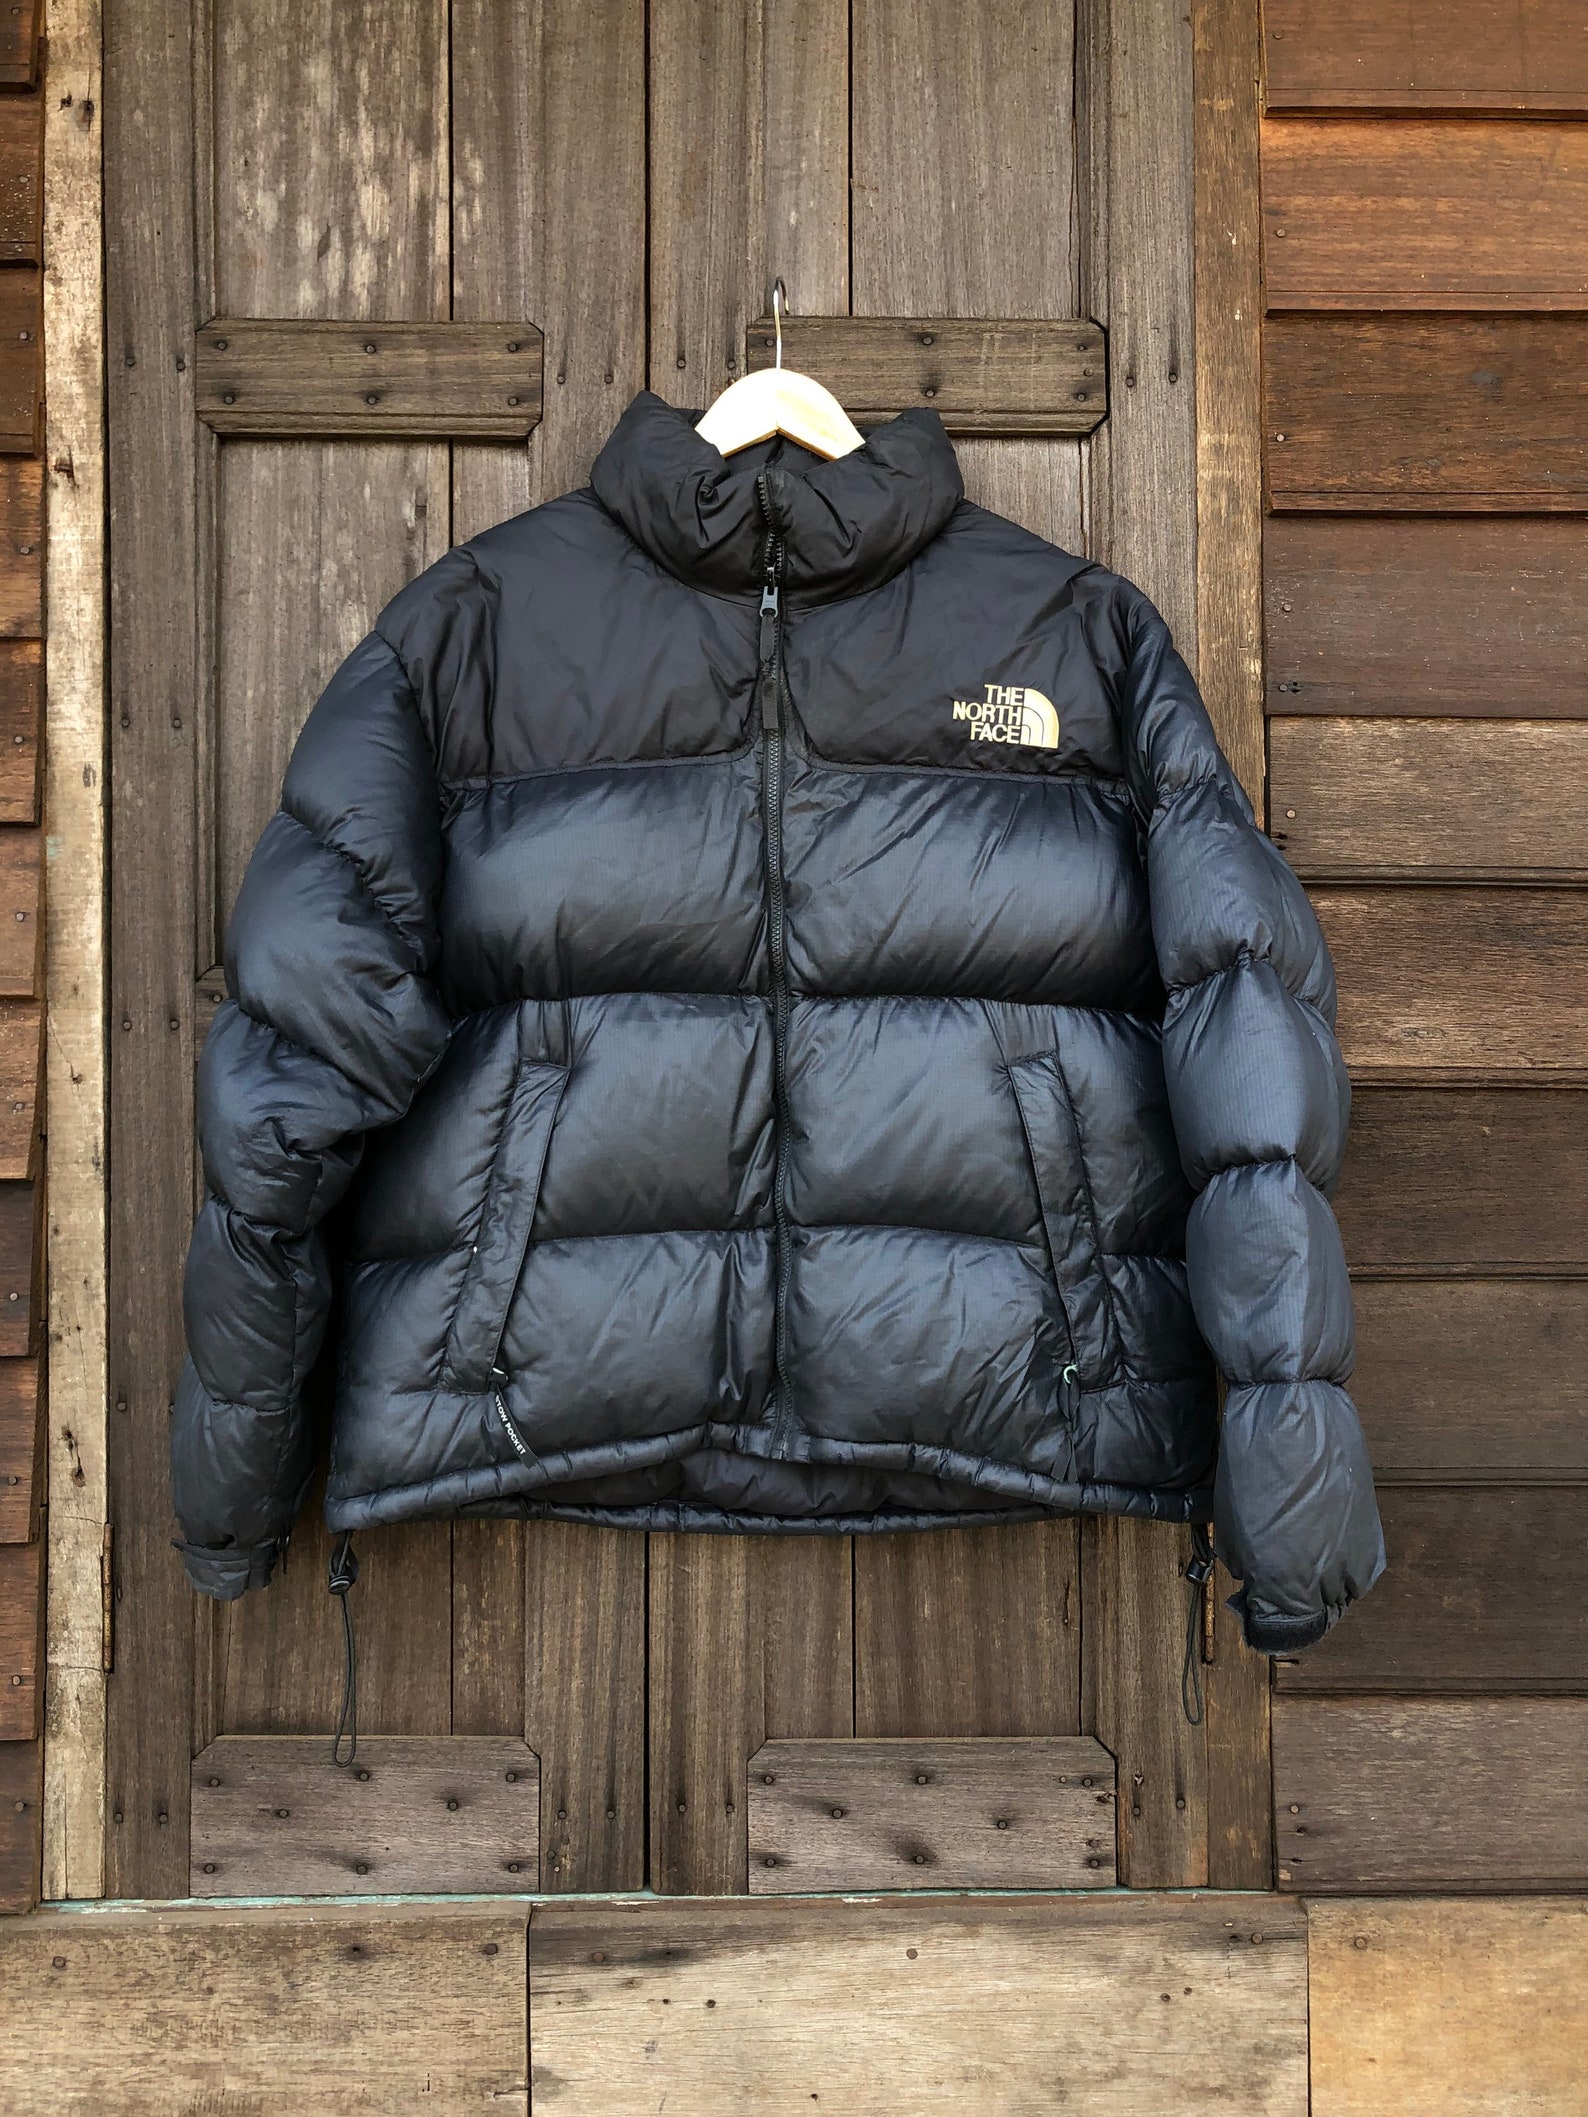 North Face Jacket Beige - Totes Water-resistant Storm Jacket | Landrisand